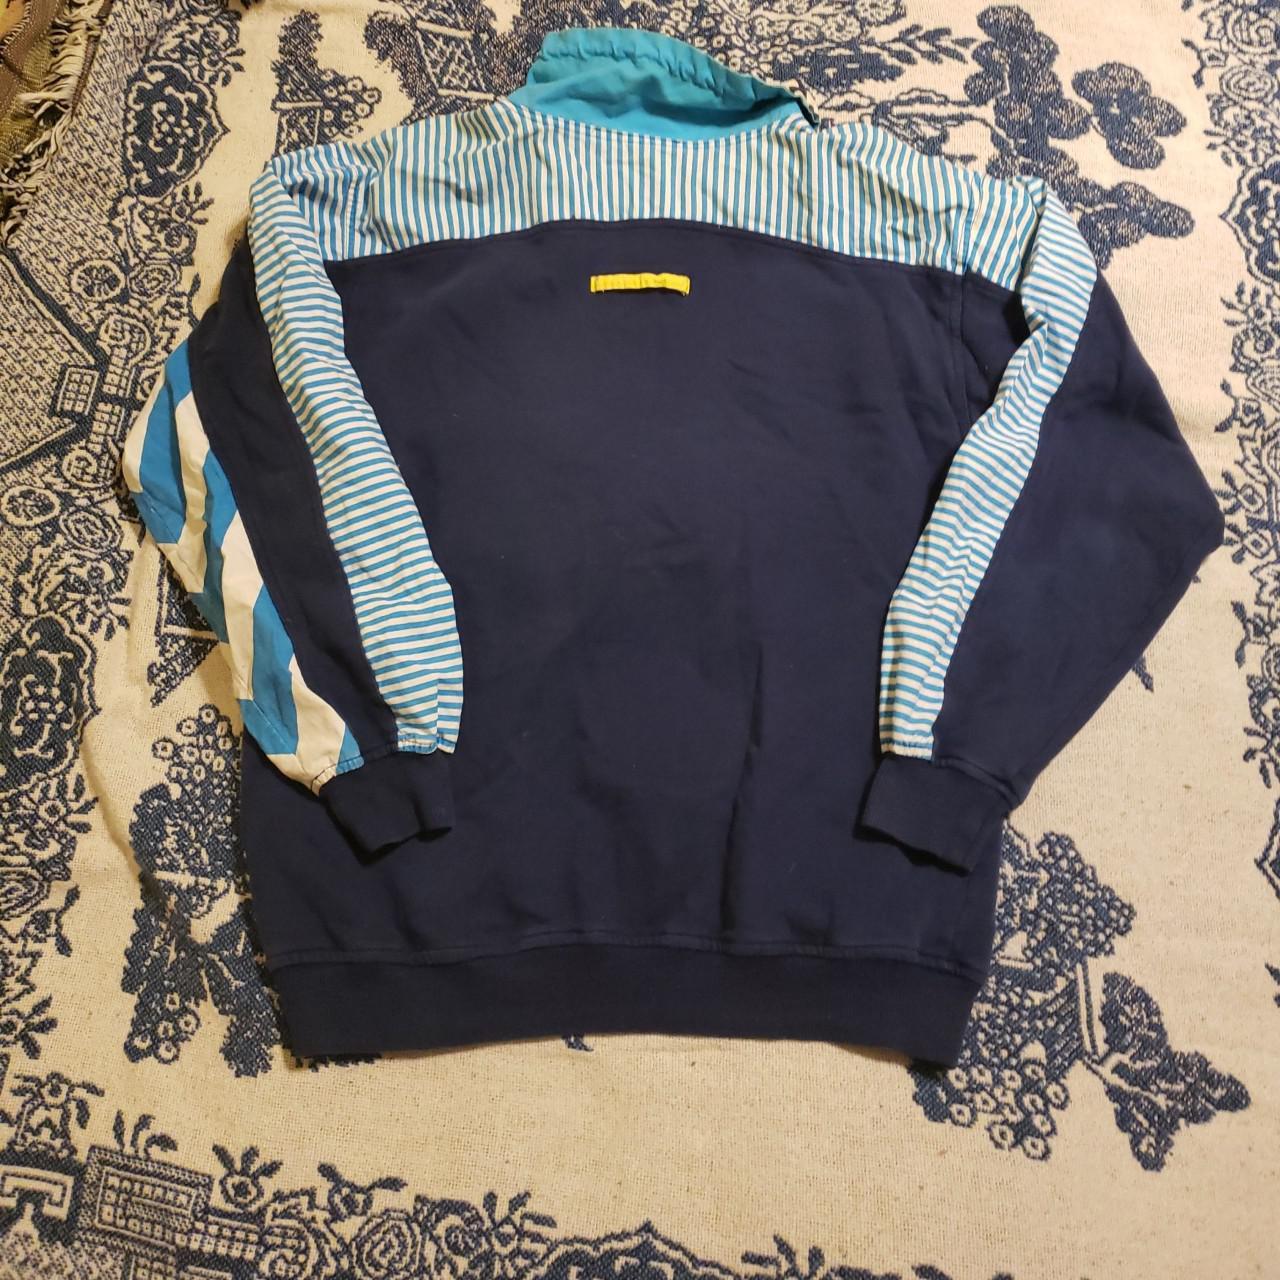 Vintage 80s Line Up Sweatshirt Jacket Windbreaker L... - Depop